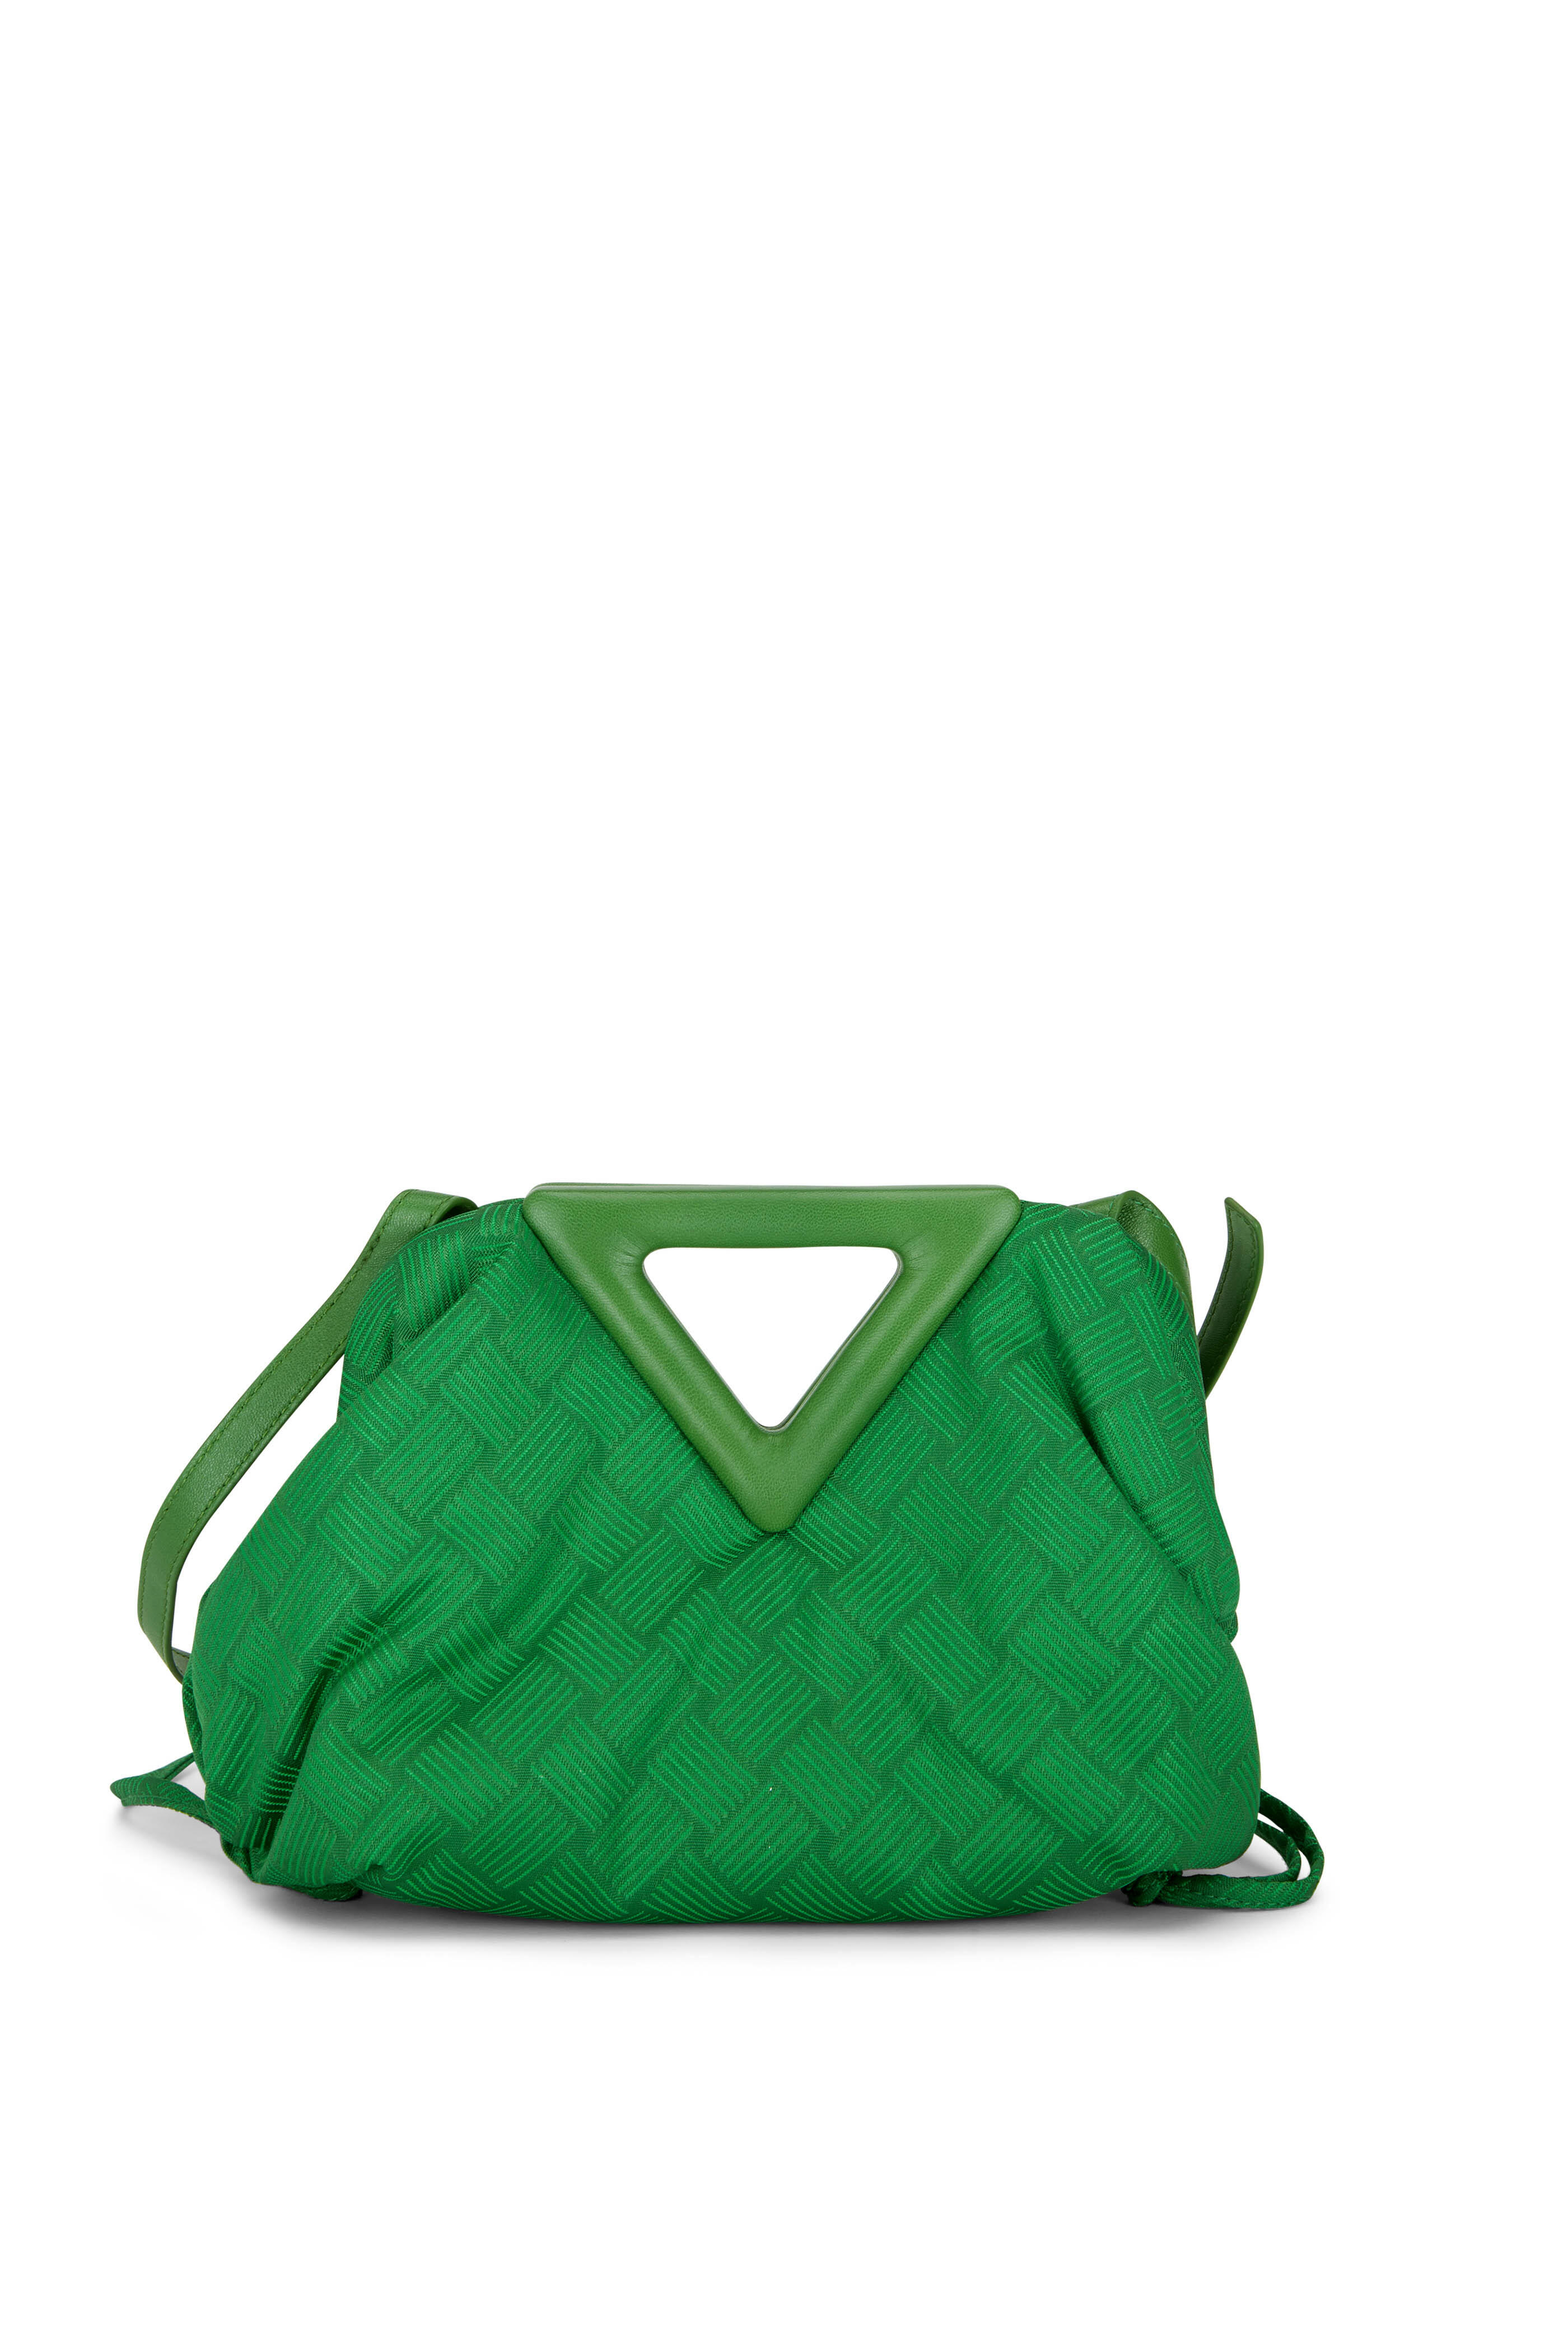 Bottega Veneta Mini Loop Parakeet Green Leather Shoulder Bag New